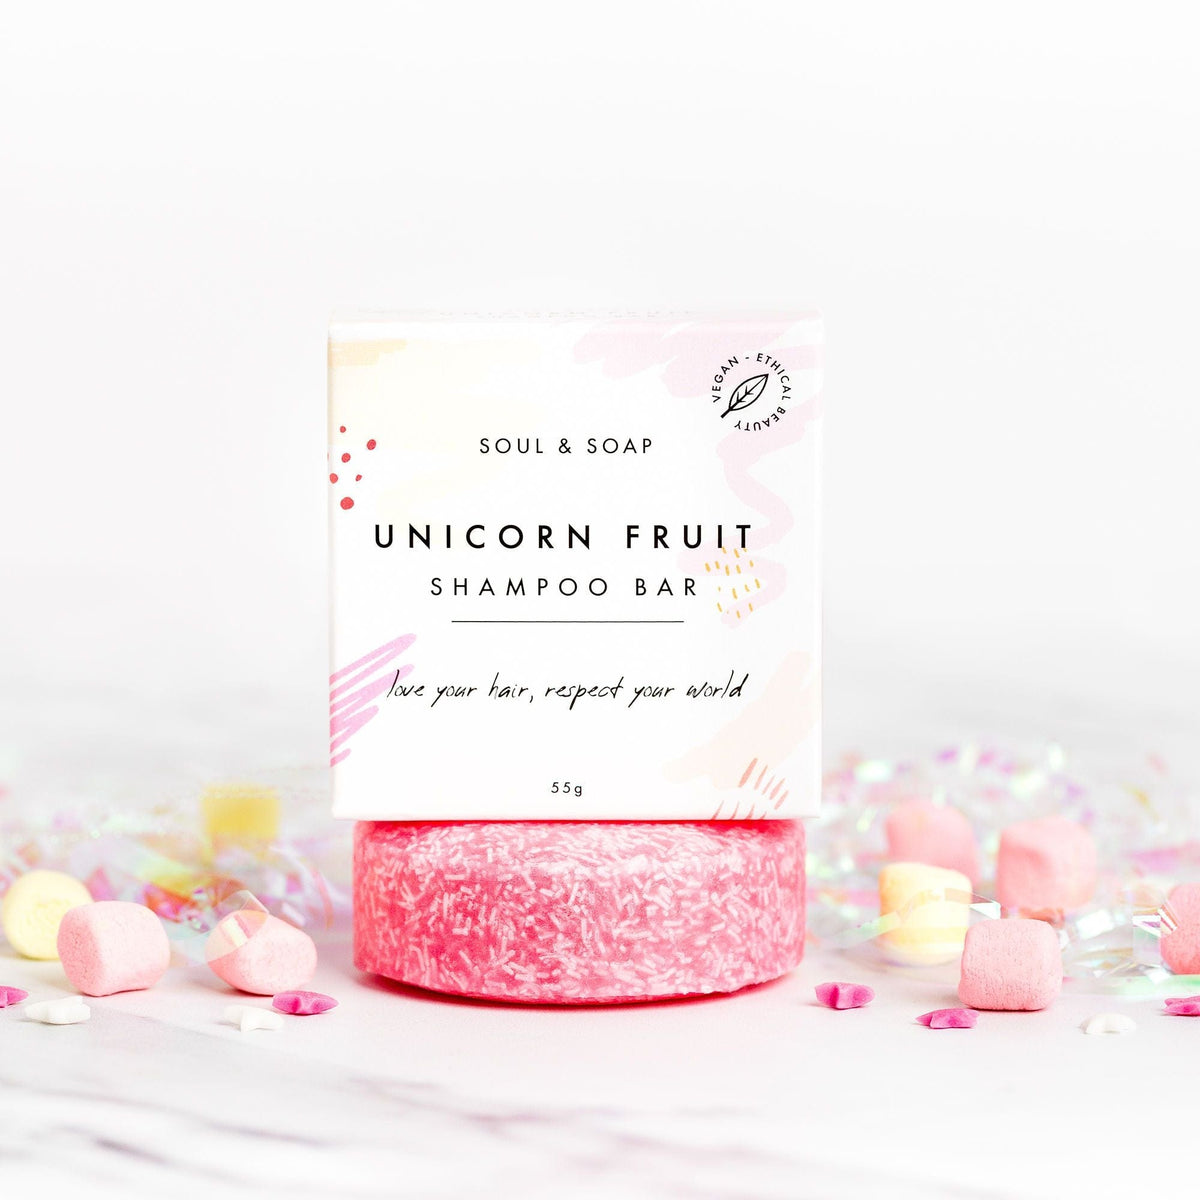 Soul & Soap Unicorn Fruit Shampoo Bar